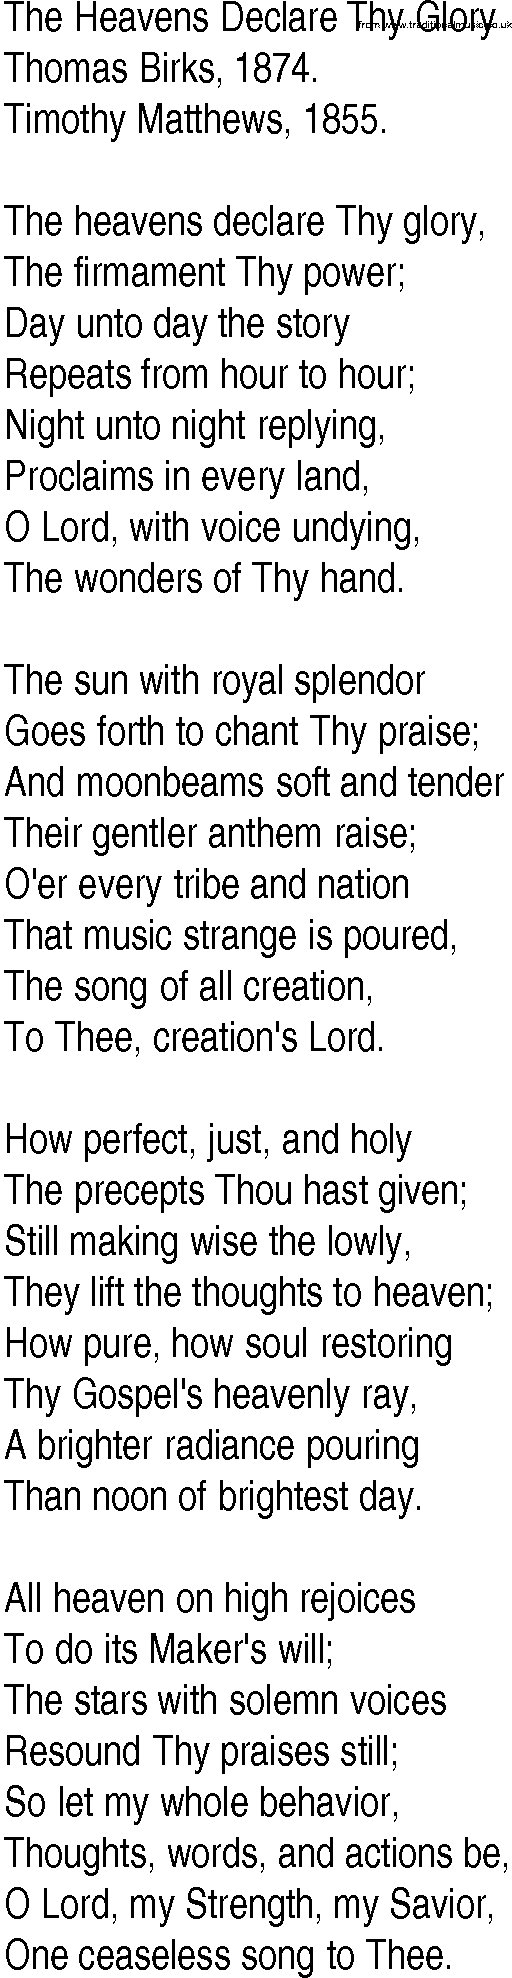 Hymn and Gospel Song: The Heavens Declare Thy Glory by Thomas Birks lyrics